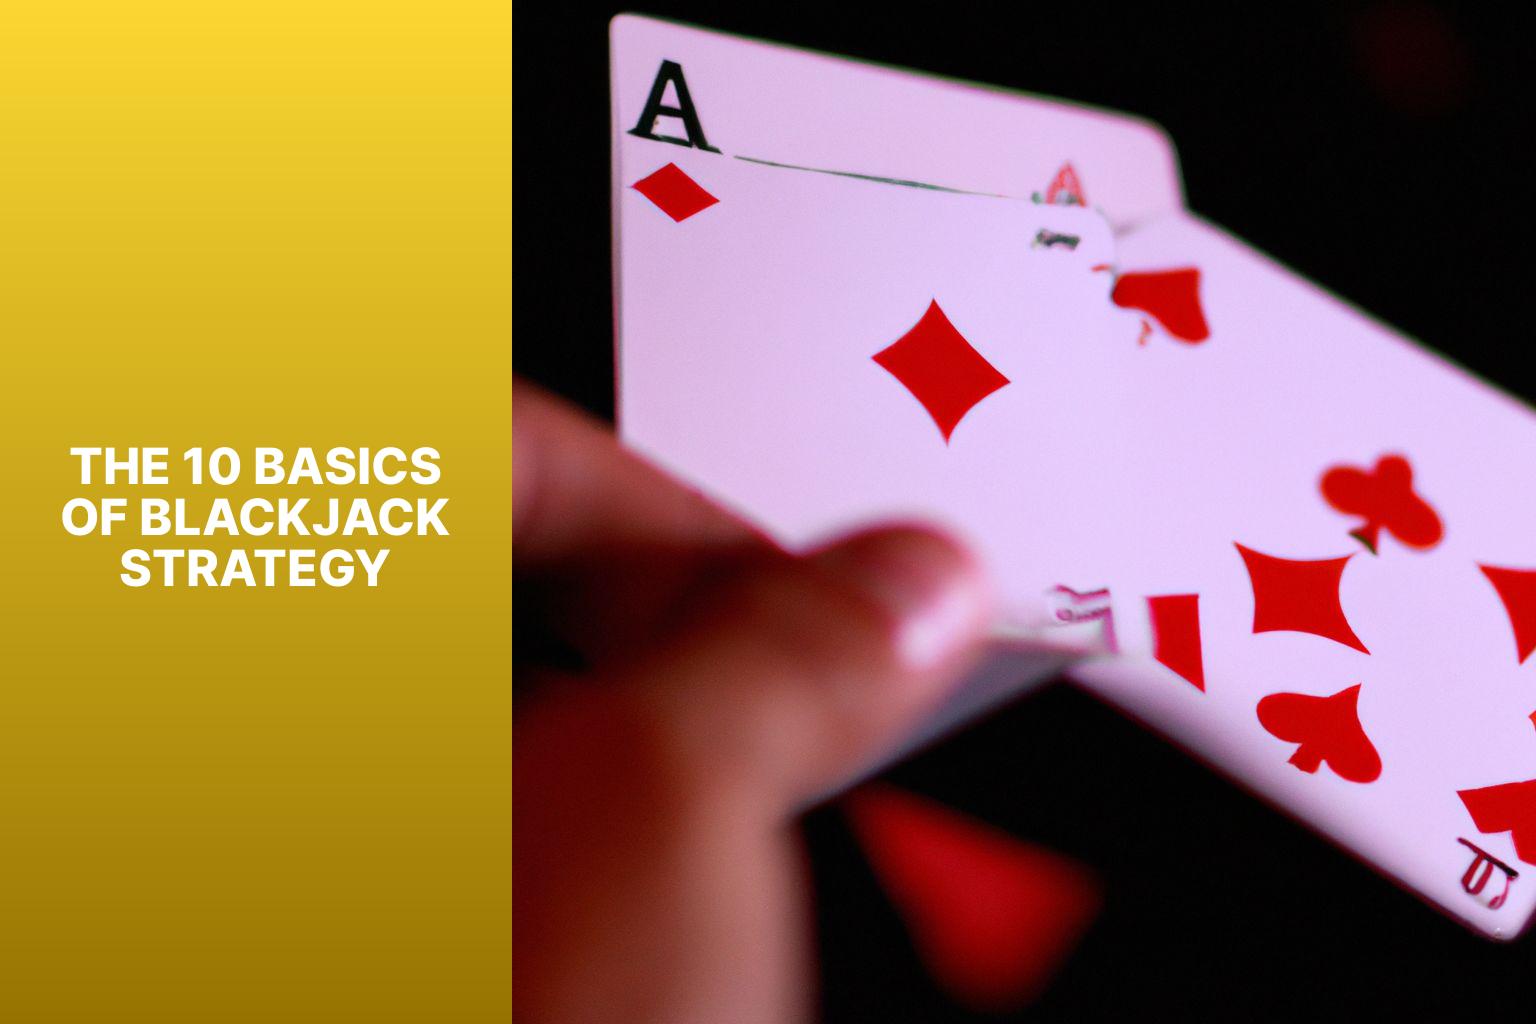 The 10 Basics of Blackjack Strategy